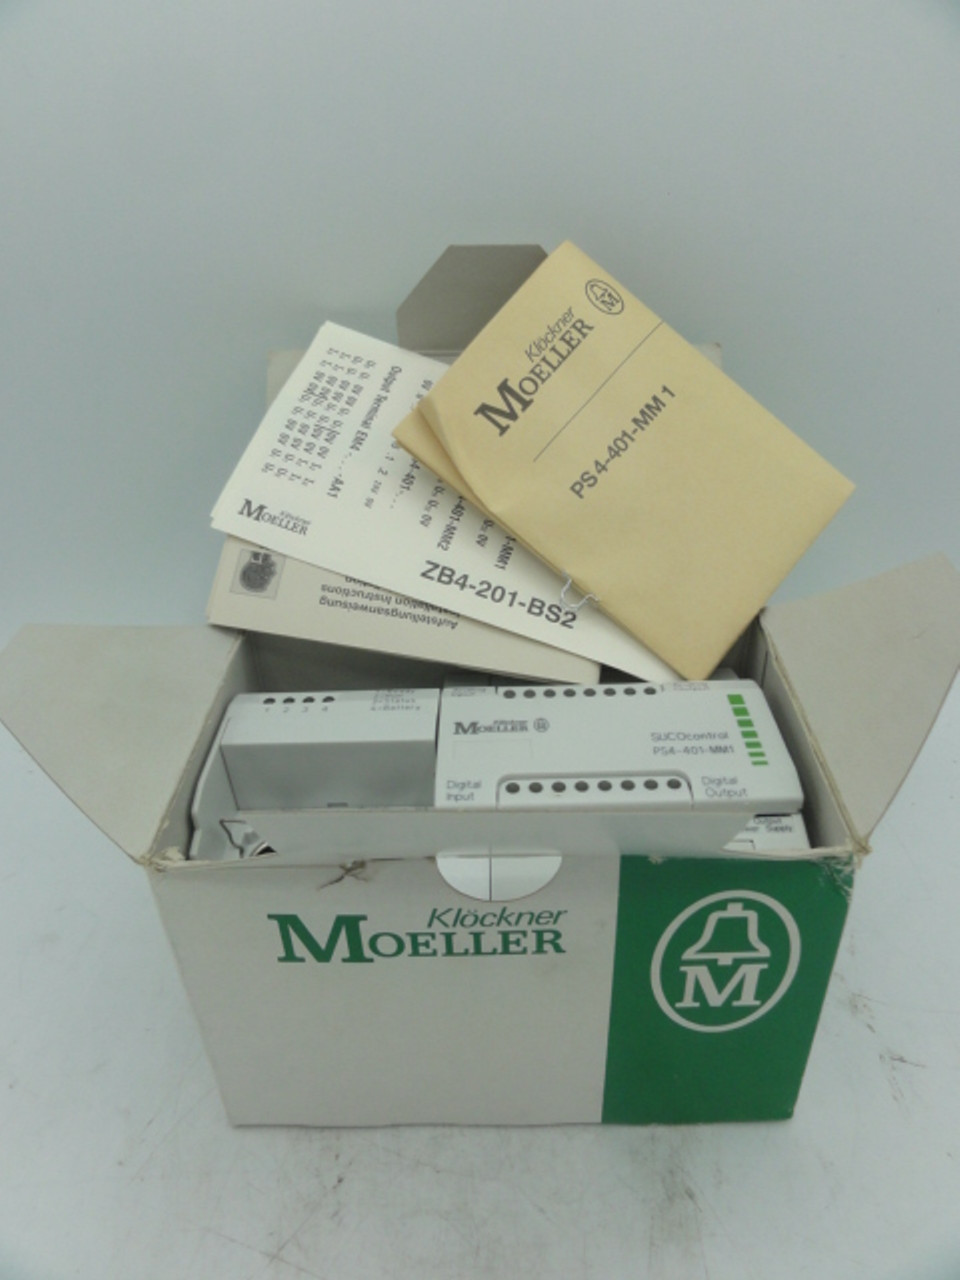 Klockner Moeller PS4-401-MM1 SUCO Compact Programmable Logic Controller